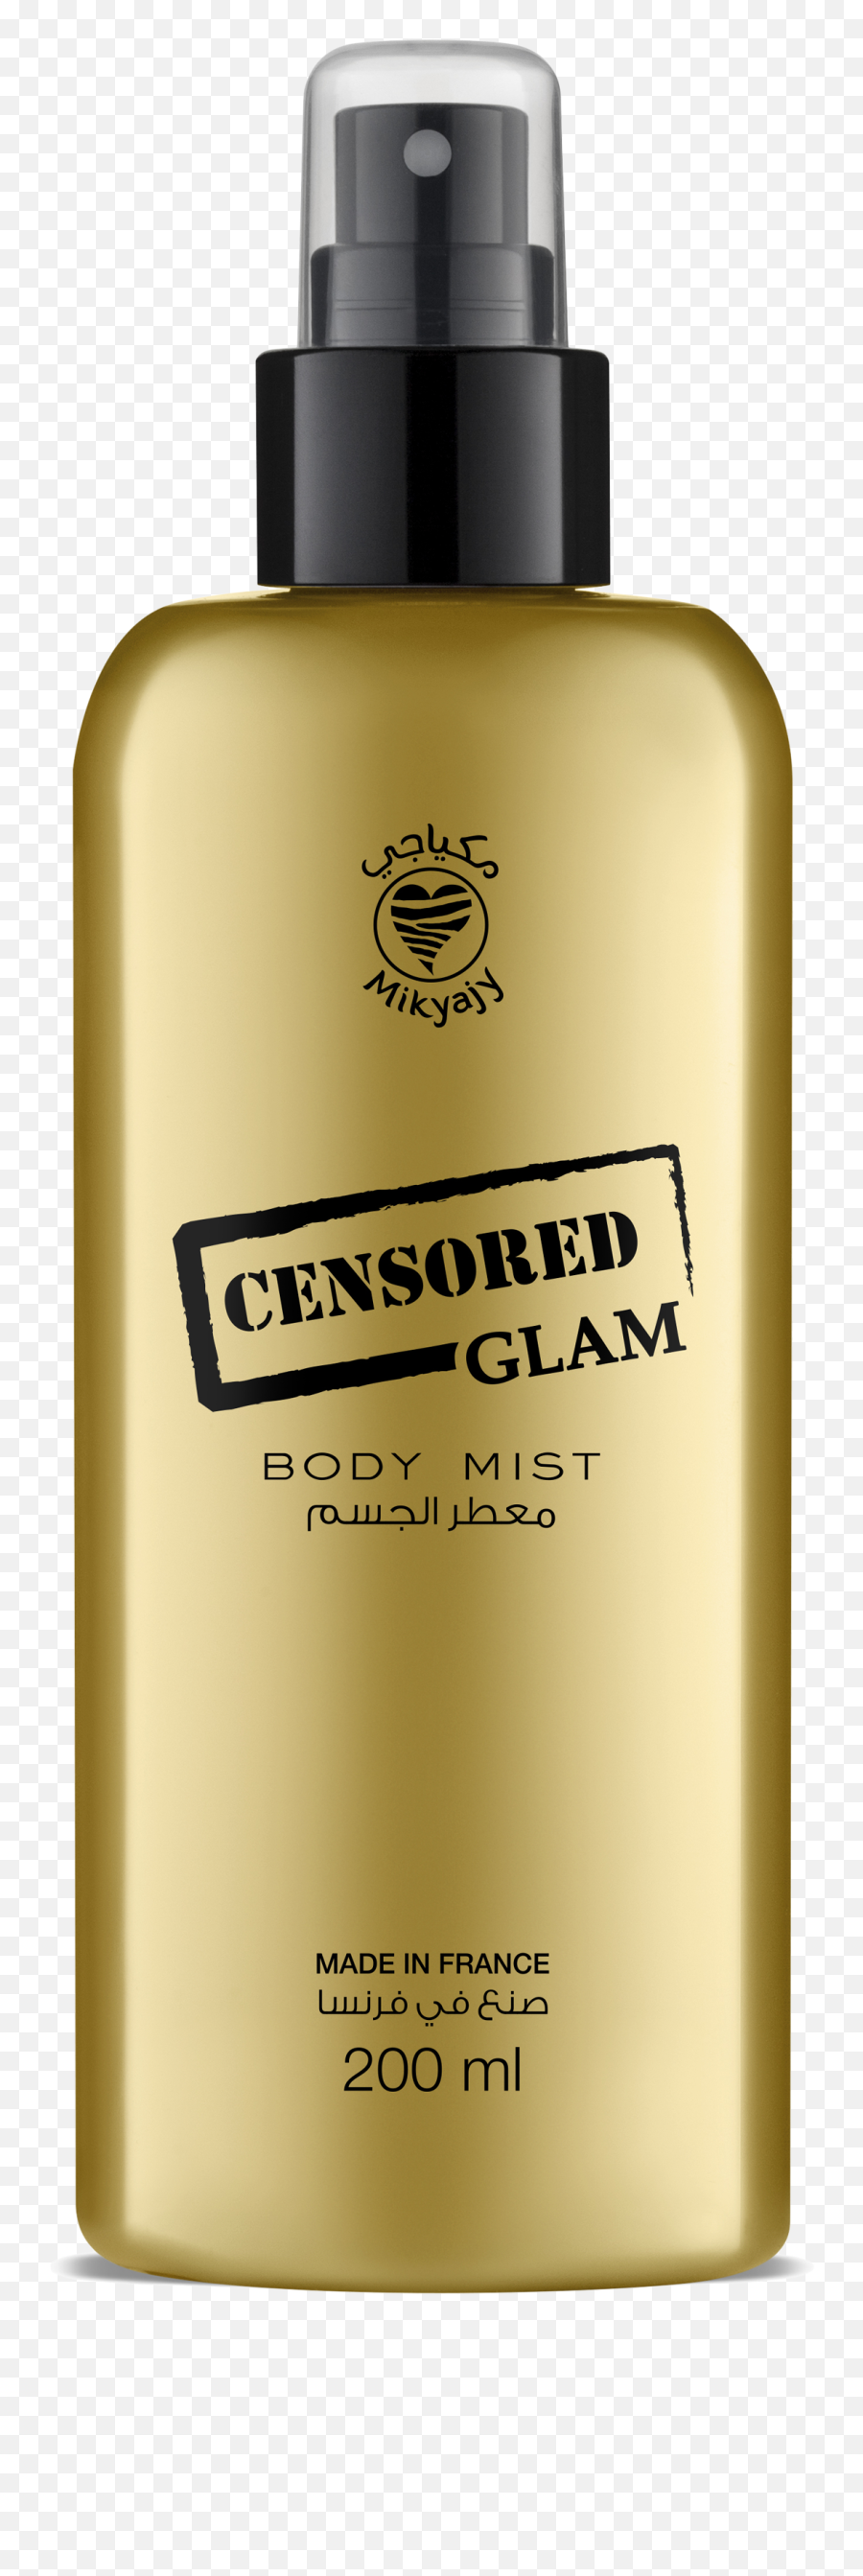 Censored Glam Body Mist 200ml Png